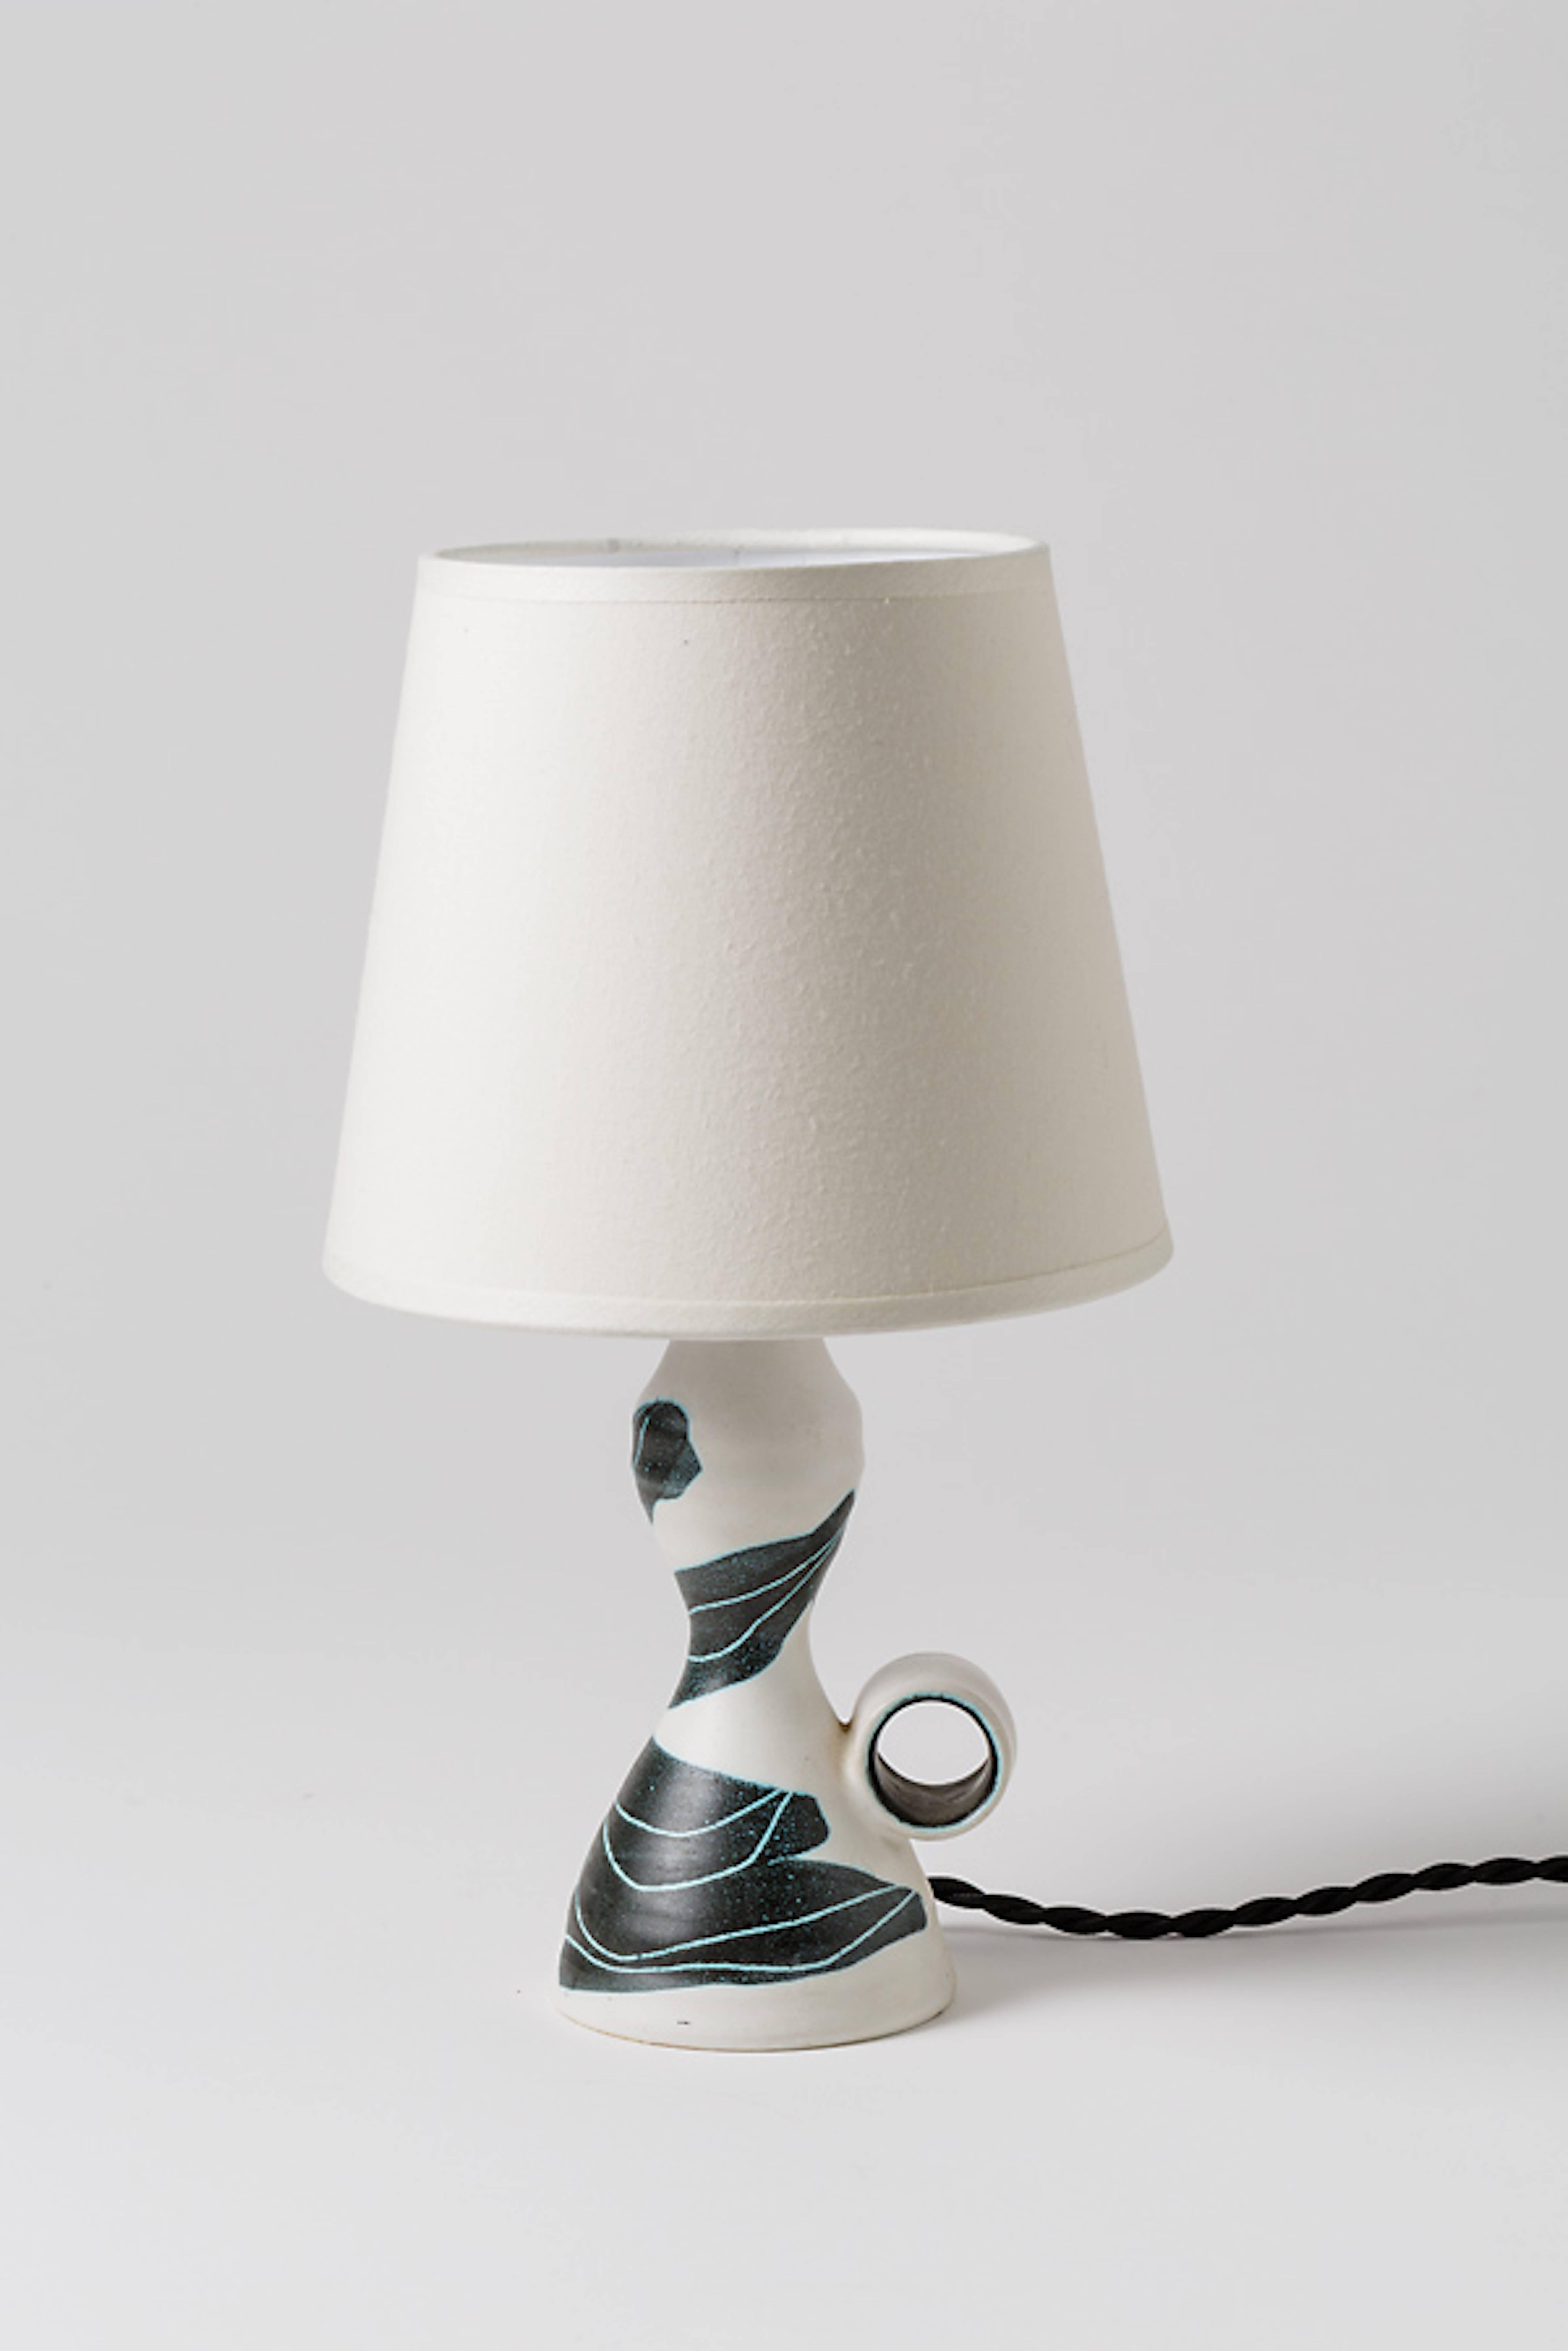 A ceramic lamp by Robert Deblander.
Circa 1960-1970.
Unique piece.
Original conditions.

Height with lamp shade : 11 ' inch 
Diameter : 16 ' inch